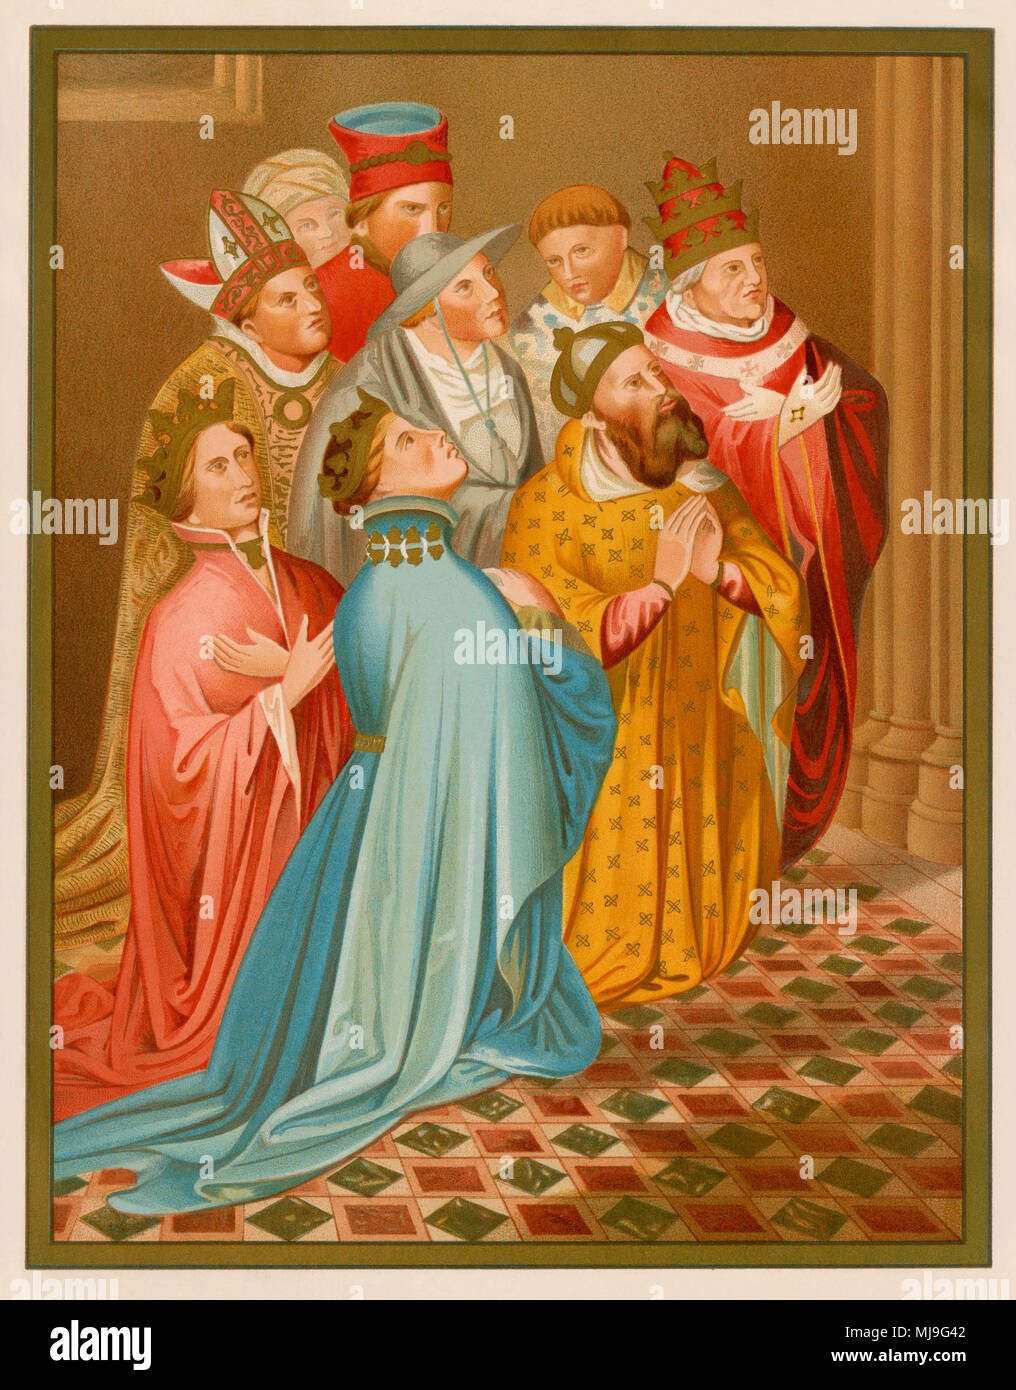 Ferdinand I of Aragon with queen Eleanor of Alburquerque, Emperor Sigismund, and Pope Martin V. Lithograph from Carderera's 'Iconografia Espanola' Stock Photo